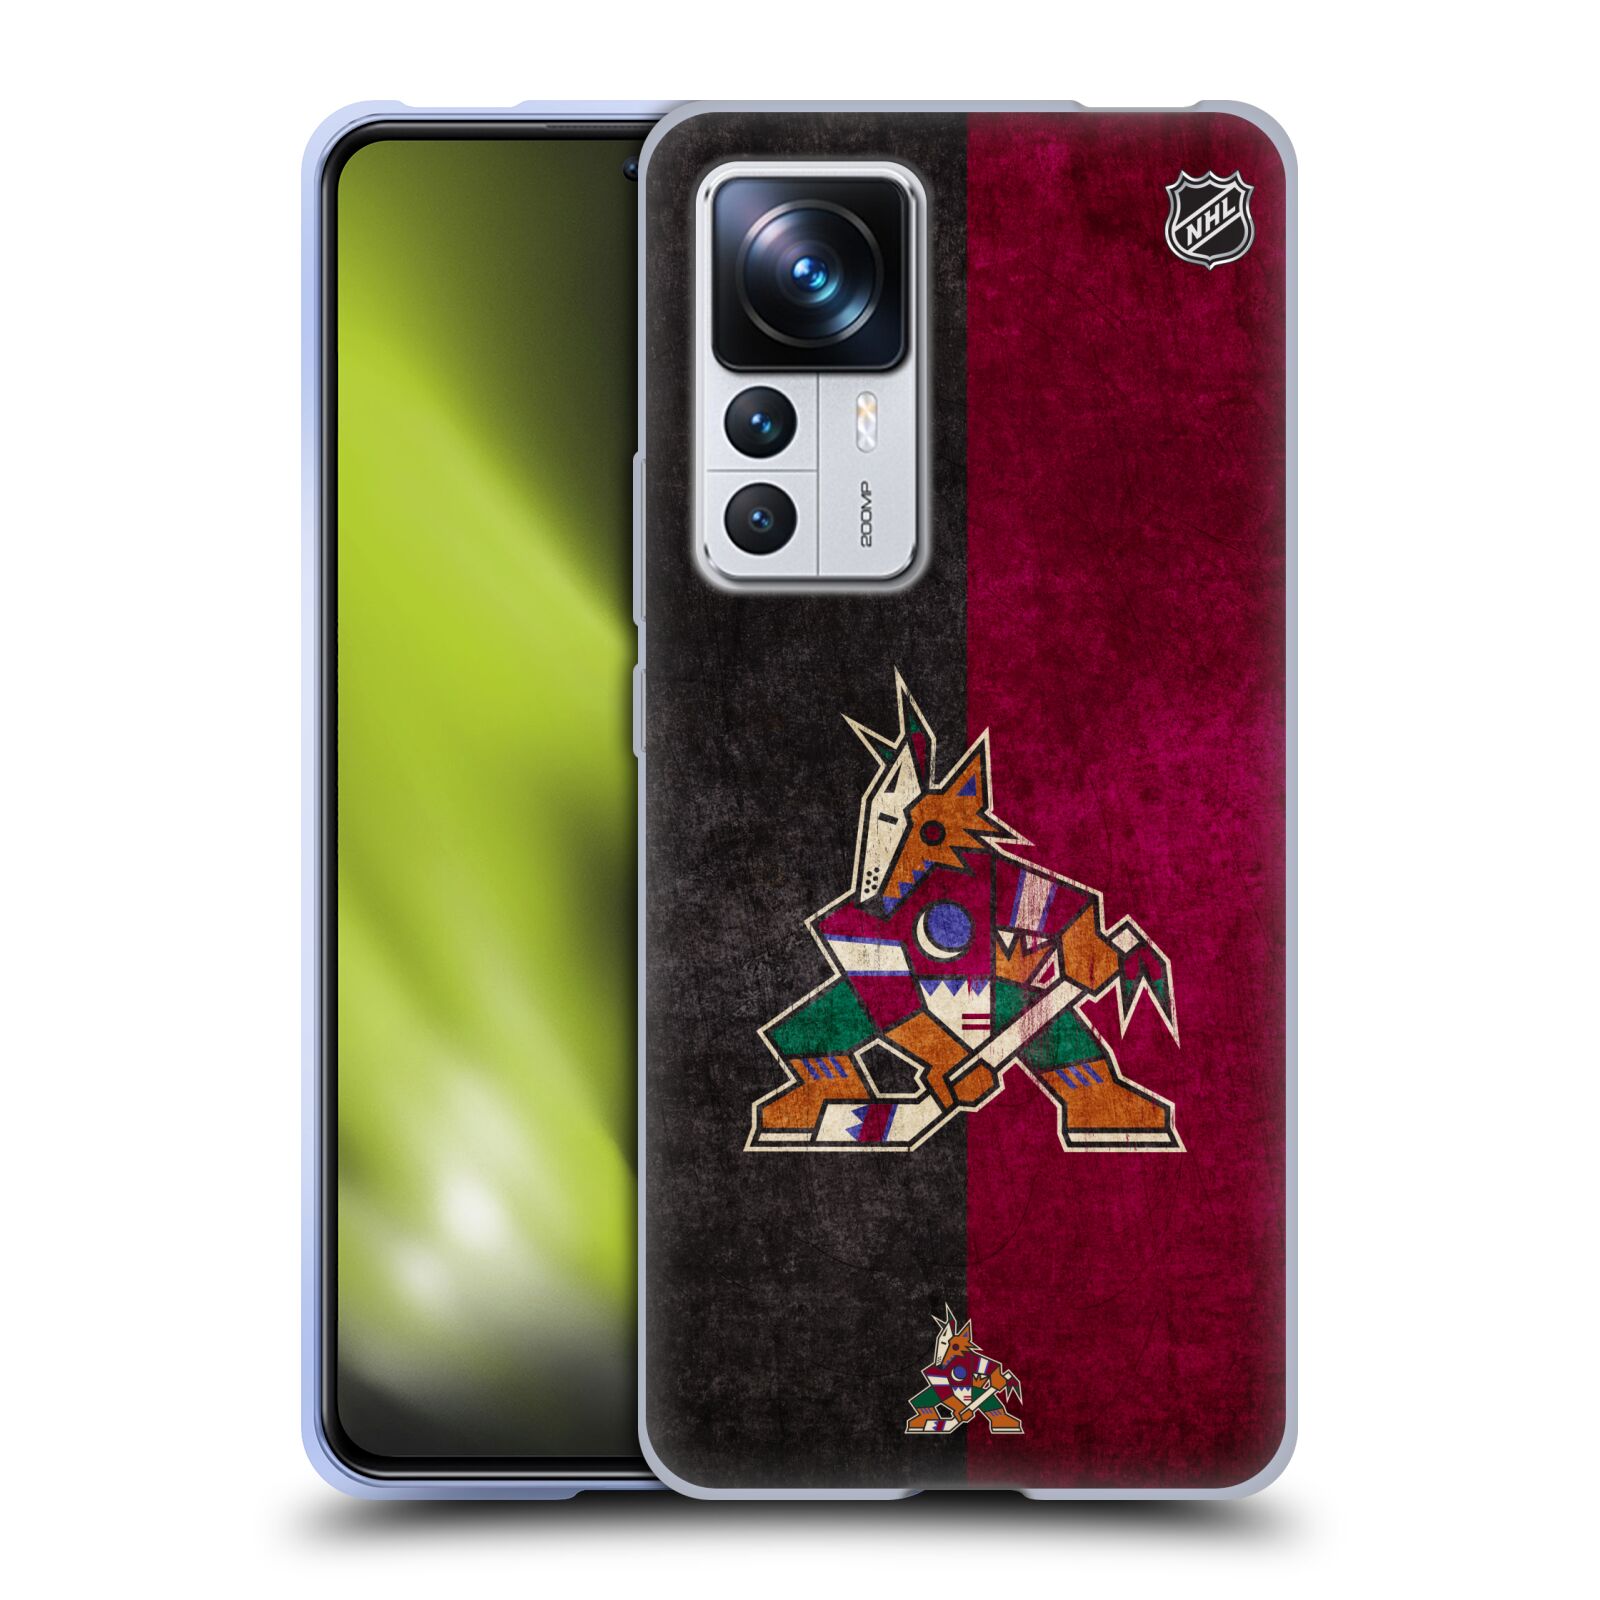 Silikonové pouzdro na mobil Xiaomi 12T / 12T Pro - NHL - Půlené logo Arizona Coyotes (Silikonový kryt, obal, pouzdro na mobilní telefon Xiaomi 12T / 12T Pro s licencovaným motivem NHL - Půlené logo Arizona Coyotes)